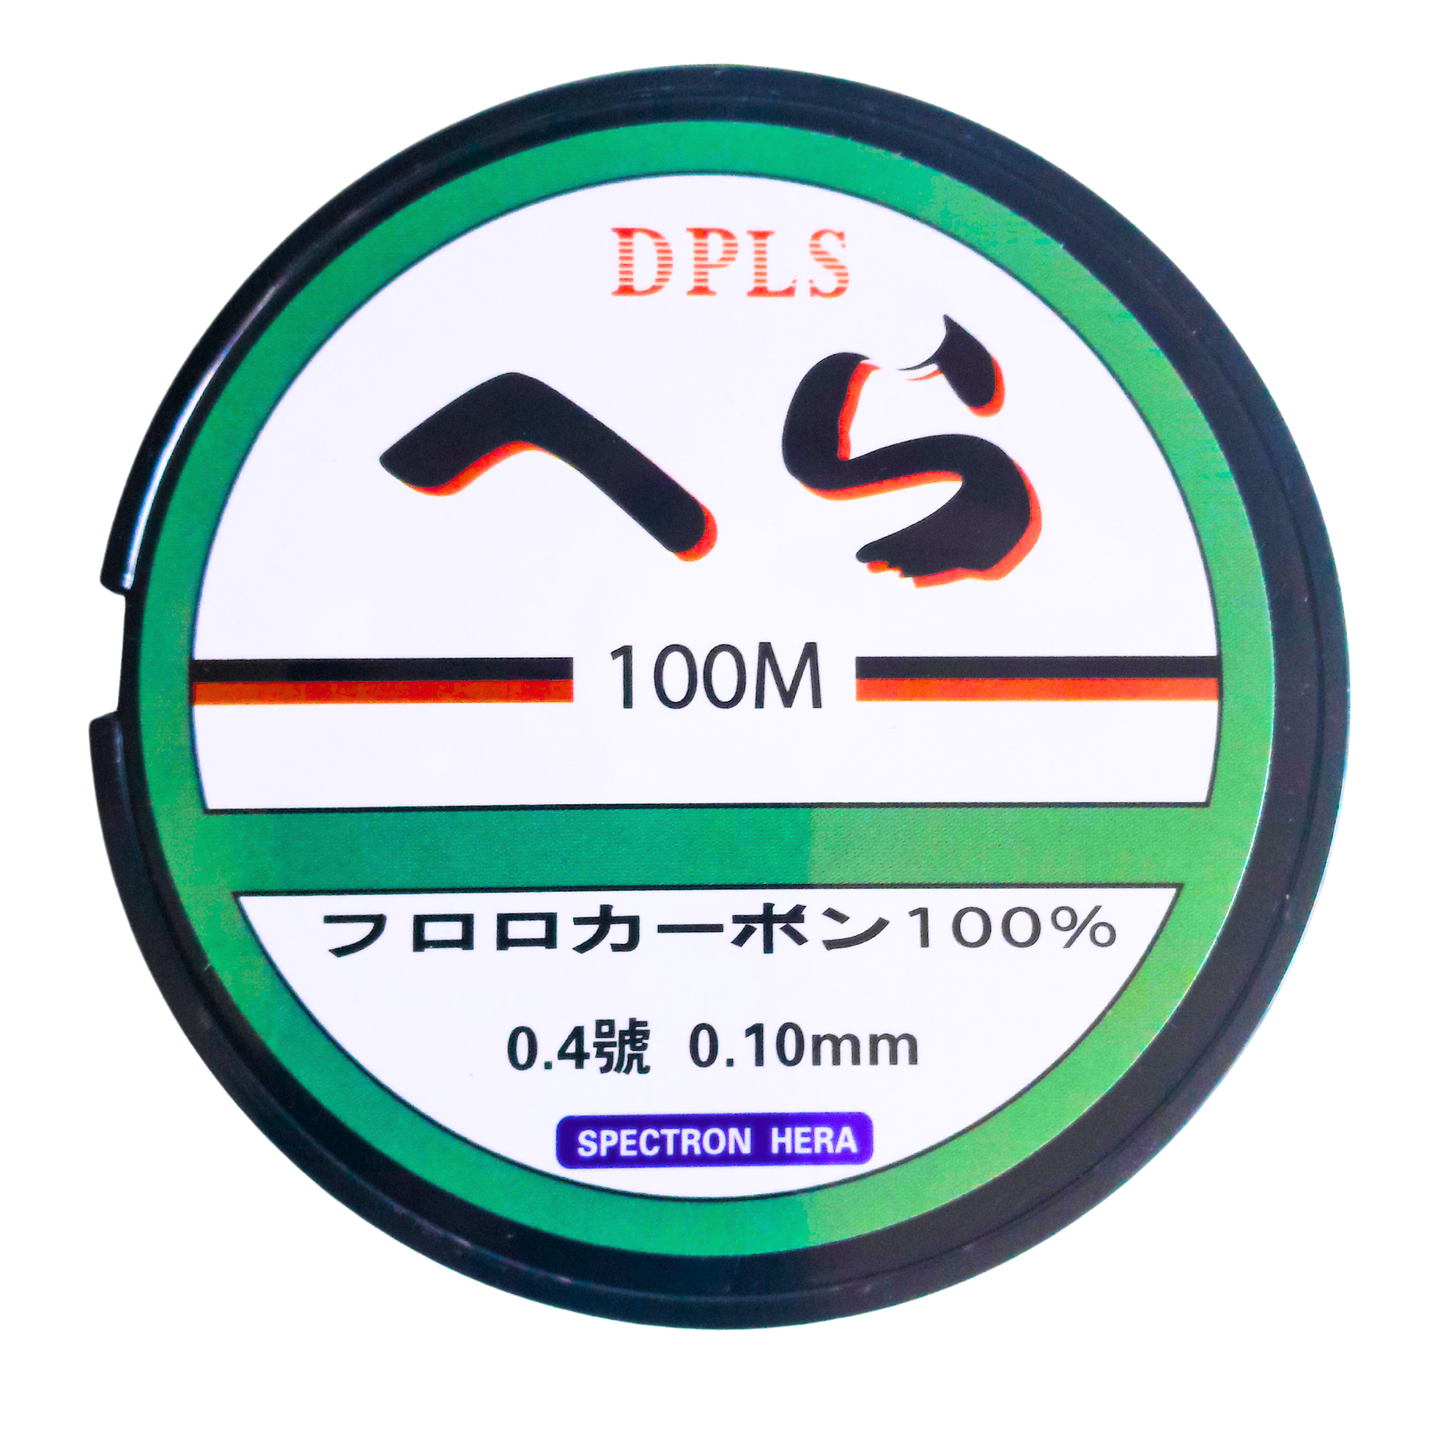 Prunanm Monofilament Fishing Line - 100m | 110yd - 0.10mm #0.4